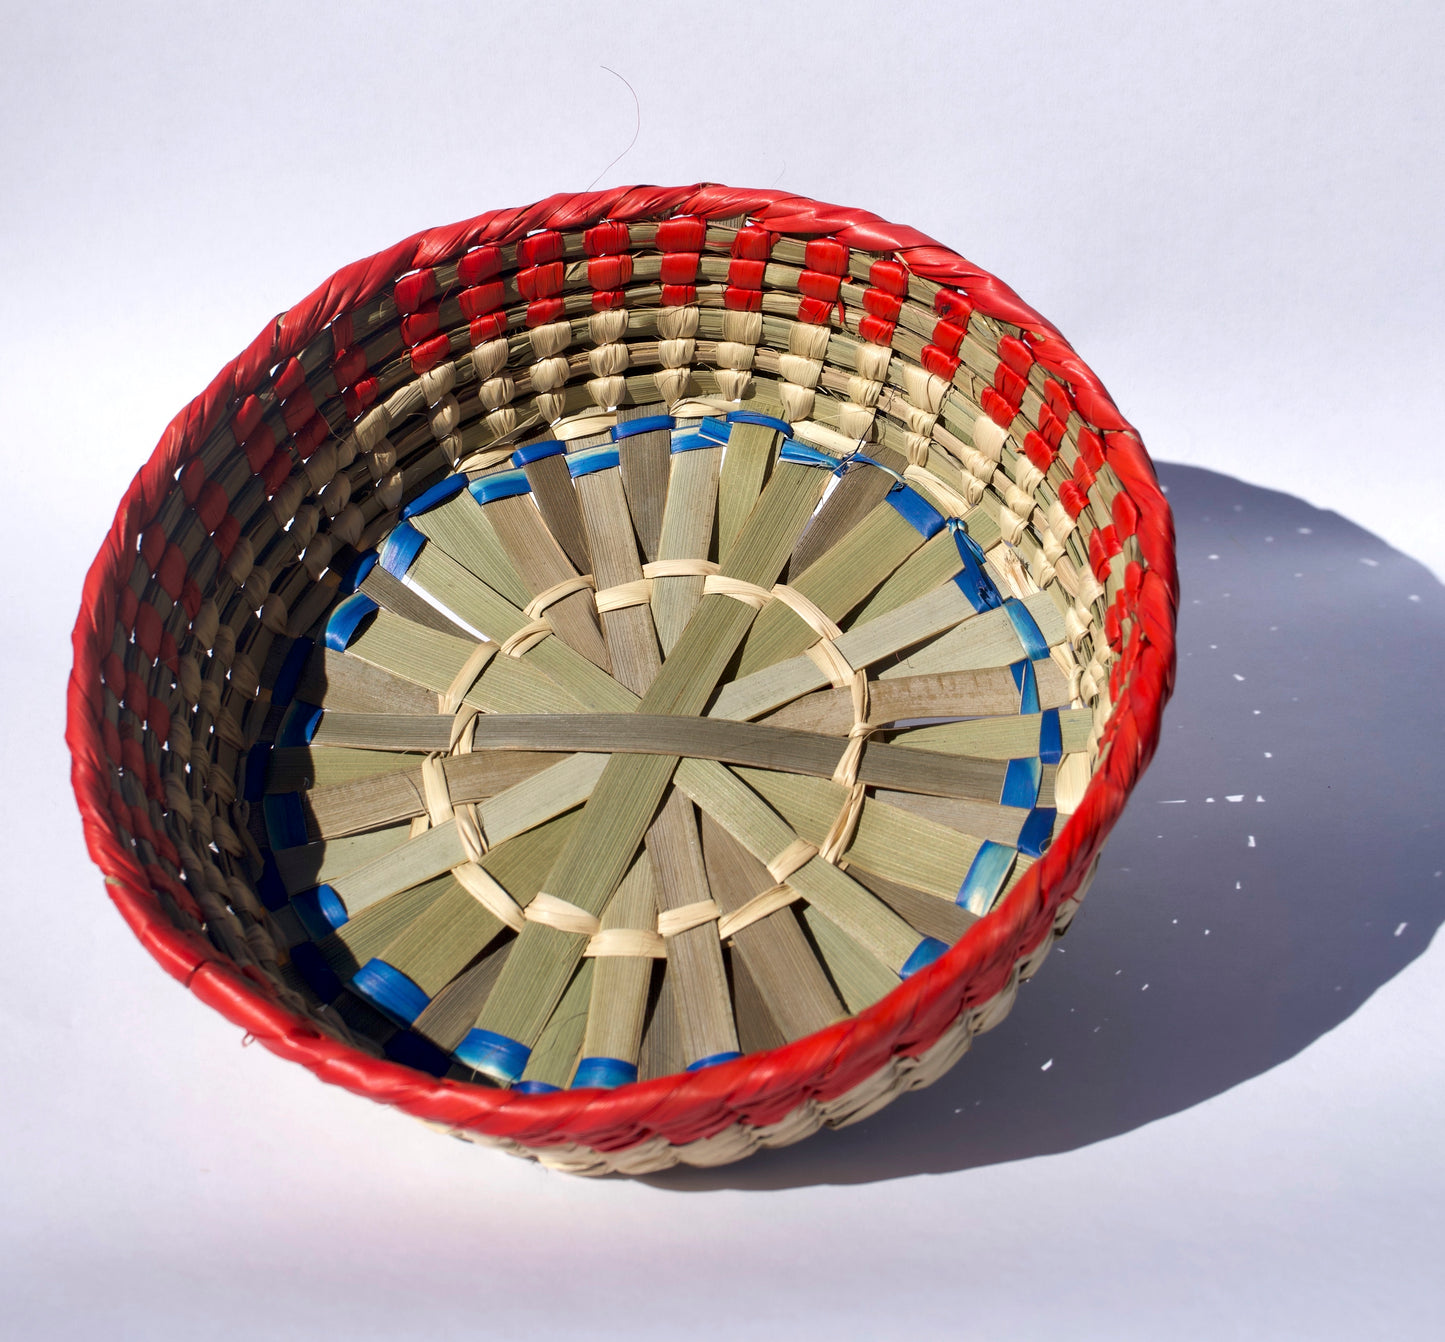 Colorful Handwoven Tortilla Basket